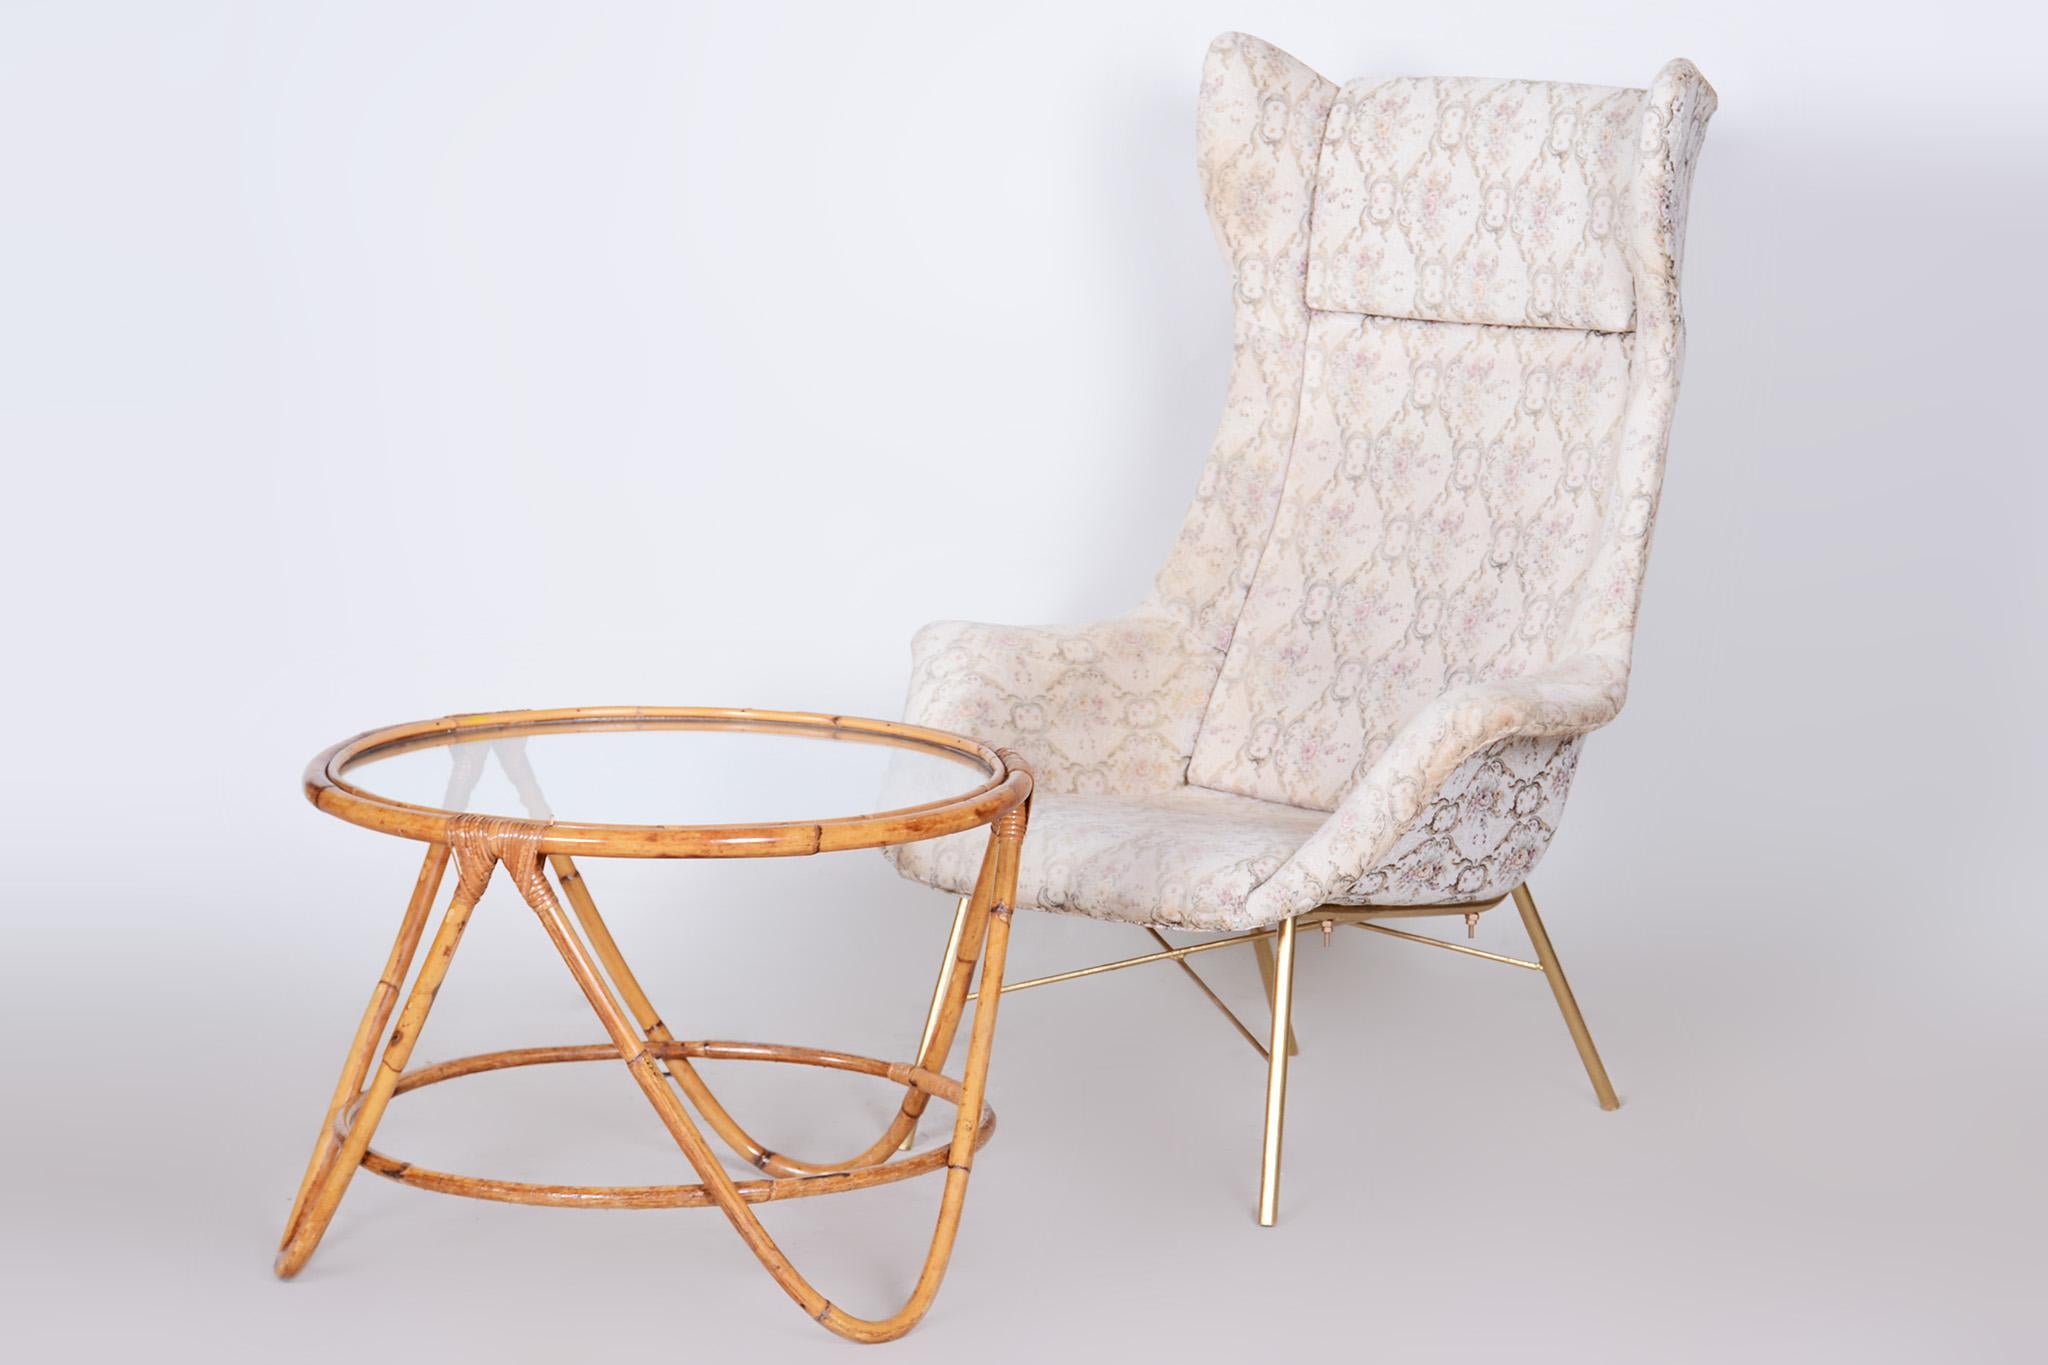 Original midcentury wing chair.

Designer: Miroslav Navratil
Source: Czechia
Period: 1950-1959
Material: Laminat, Tubular construction

Well preserved condition.